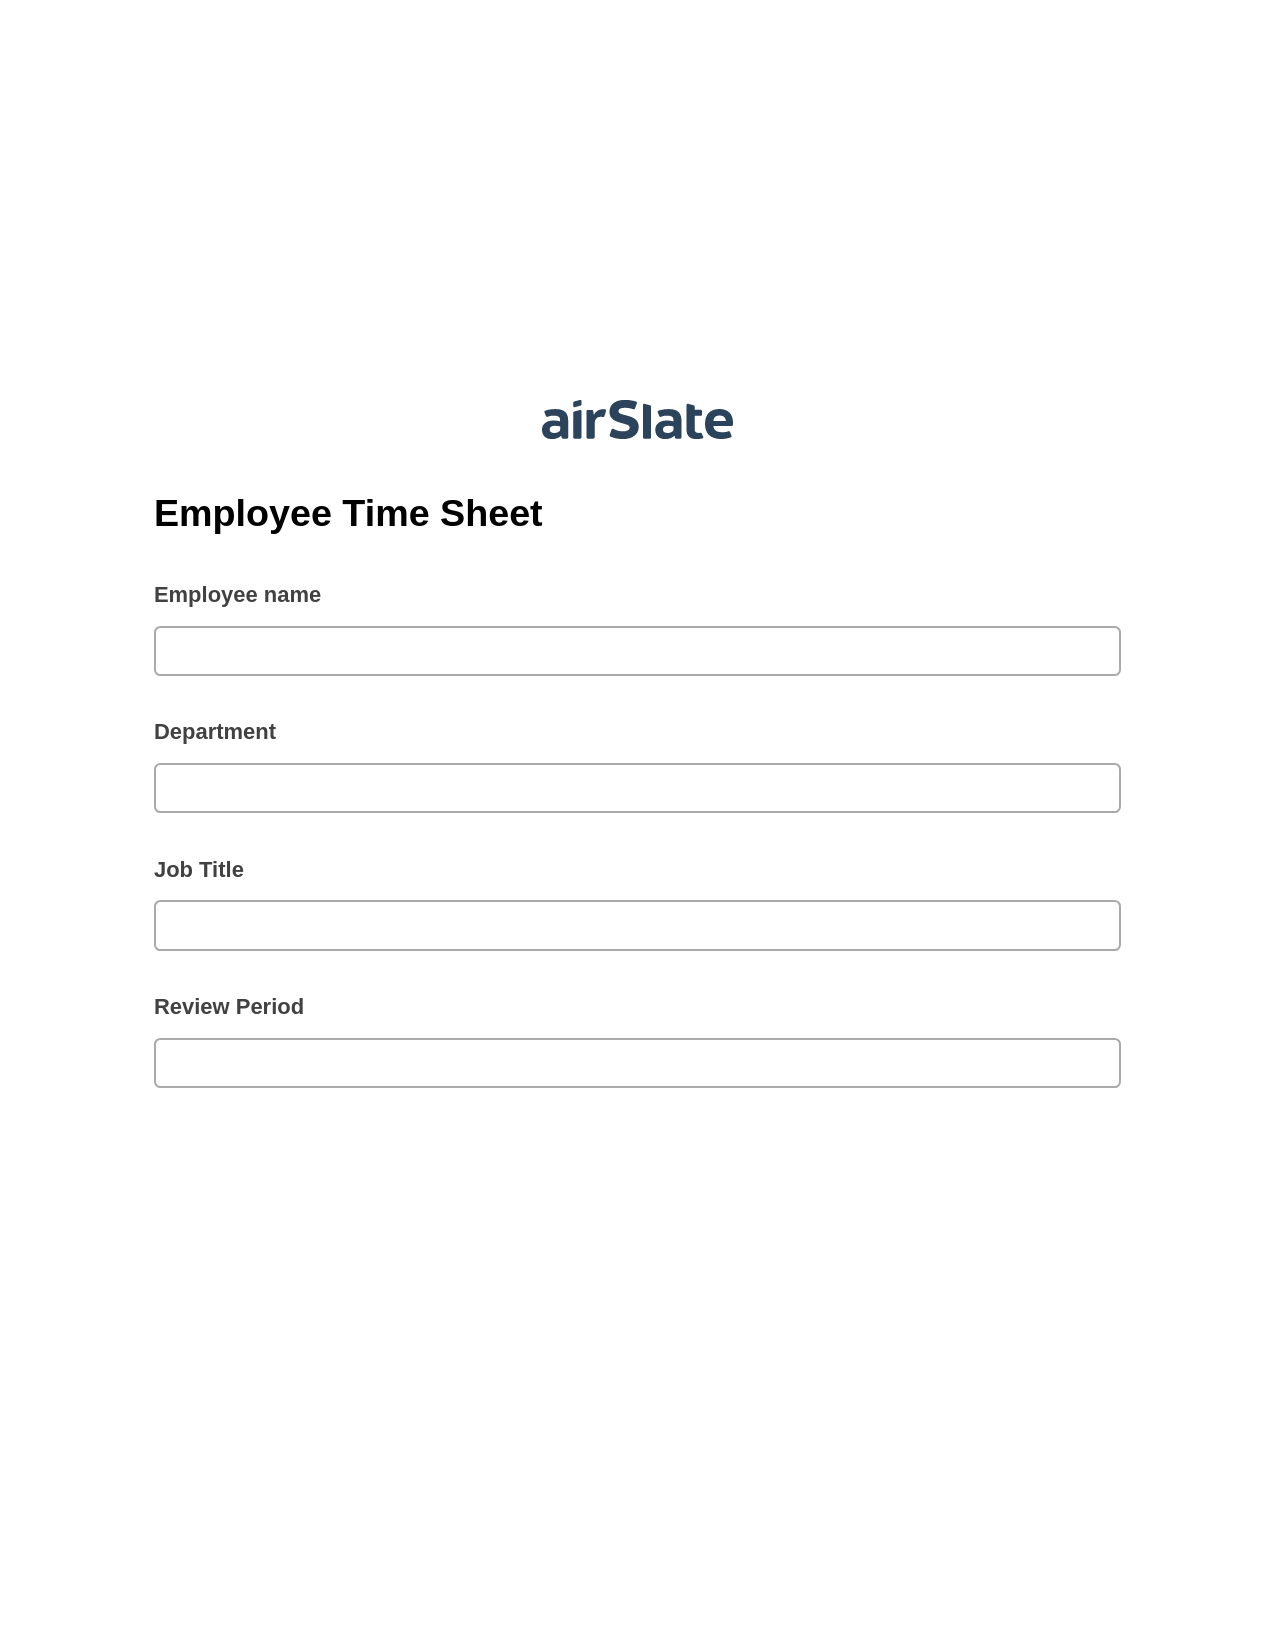 Multirole Employee Time Sheet Pre-fill from Salesforce Records Bot, Create Salesforce Records Bot, Slack Notification Postfinish Bot